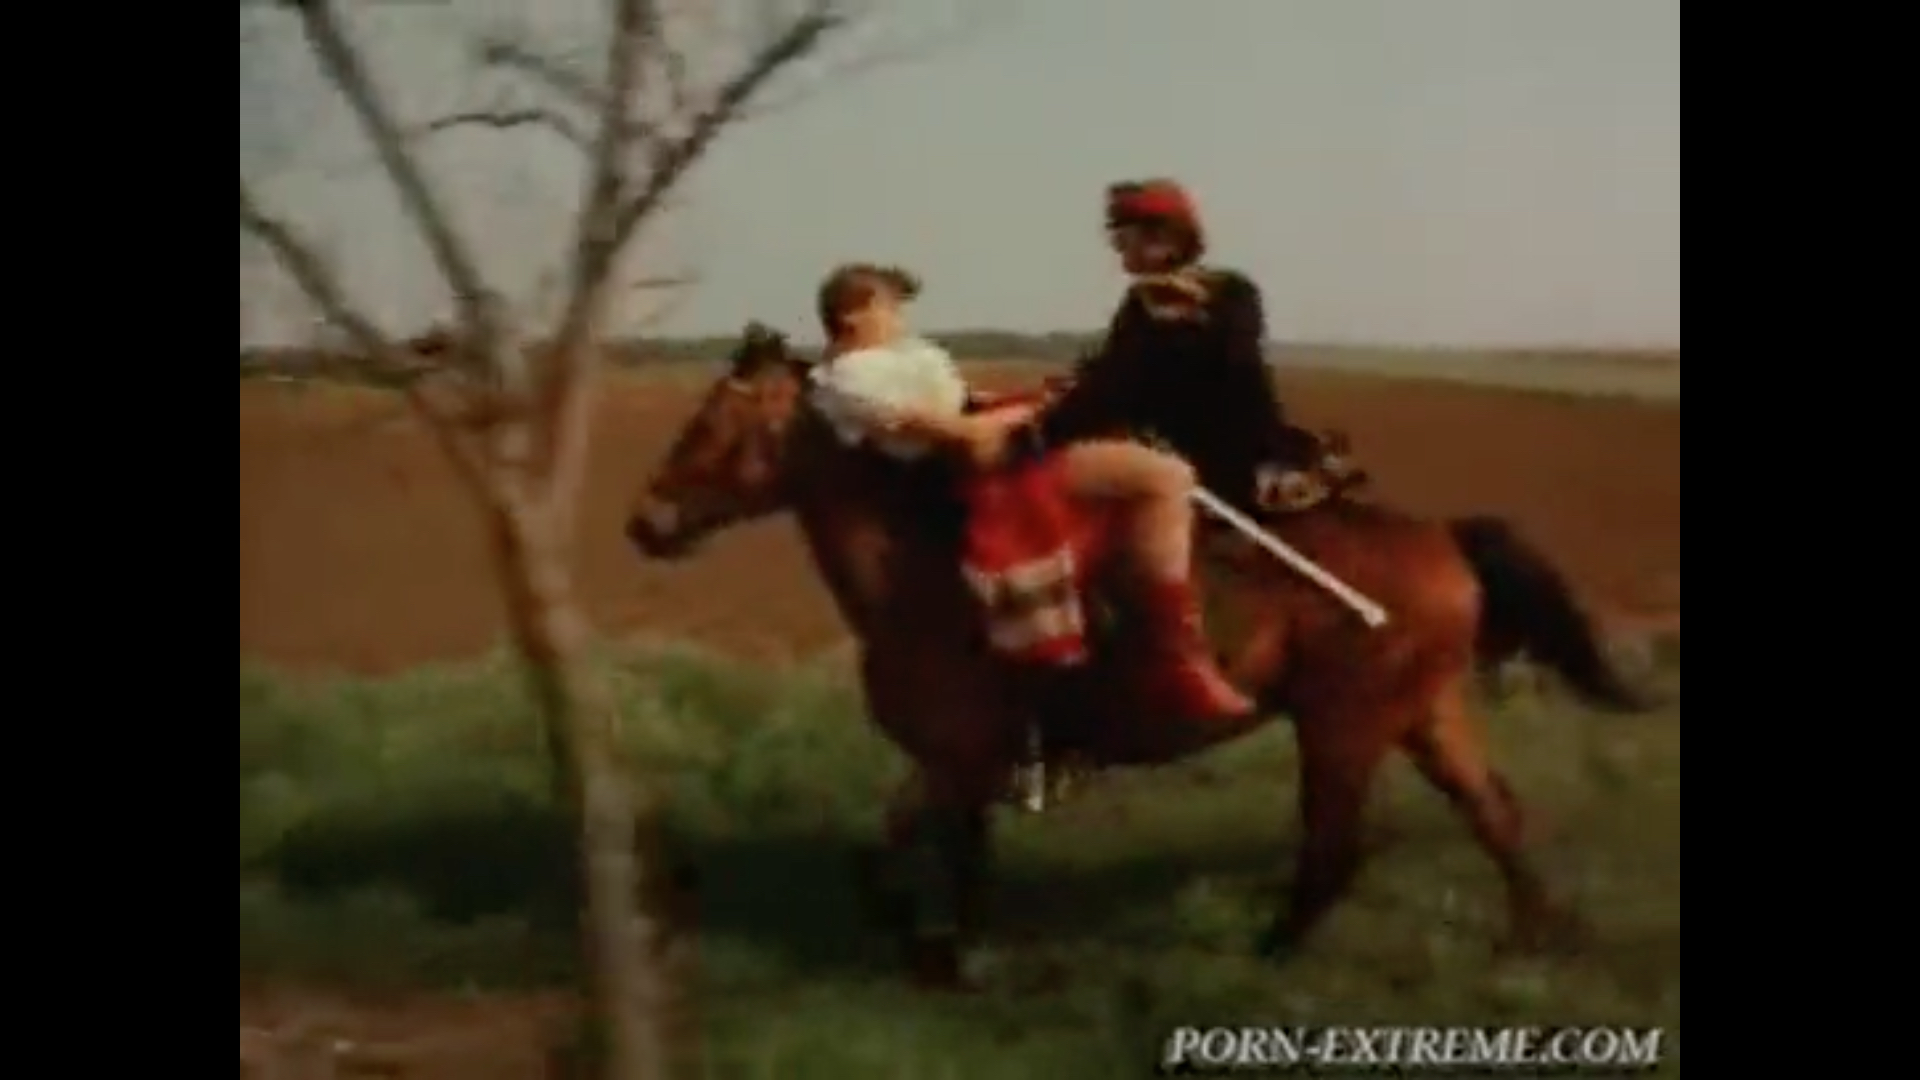 Sex on a running horse! - ThisVid.com